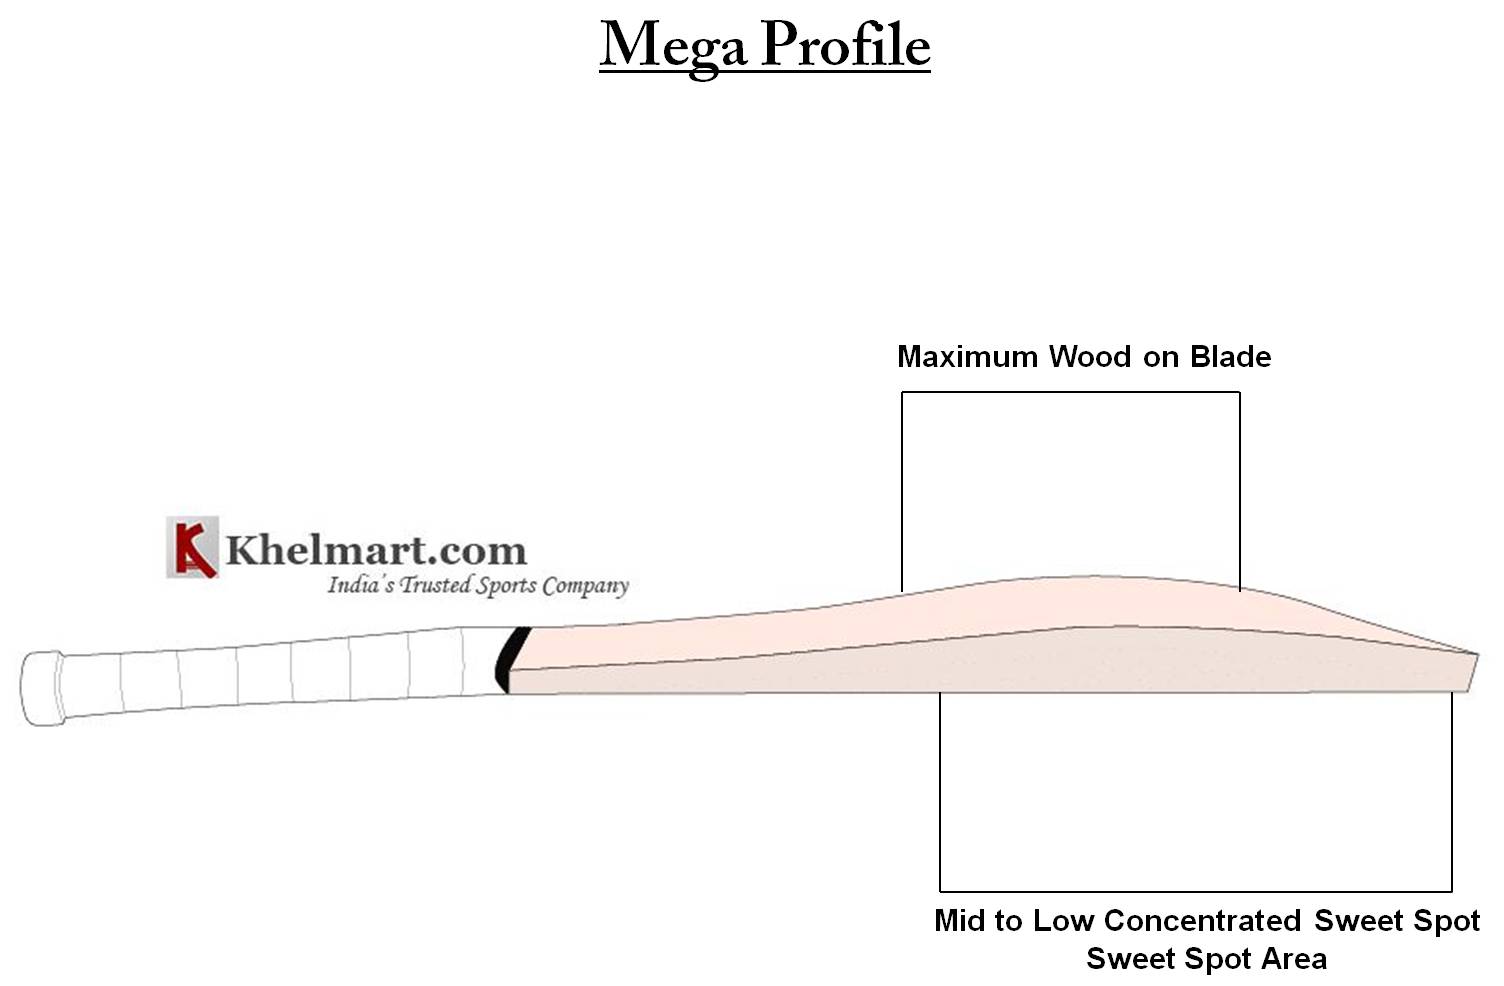 Mega_Profile_Khelmart